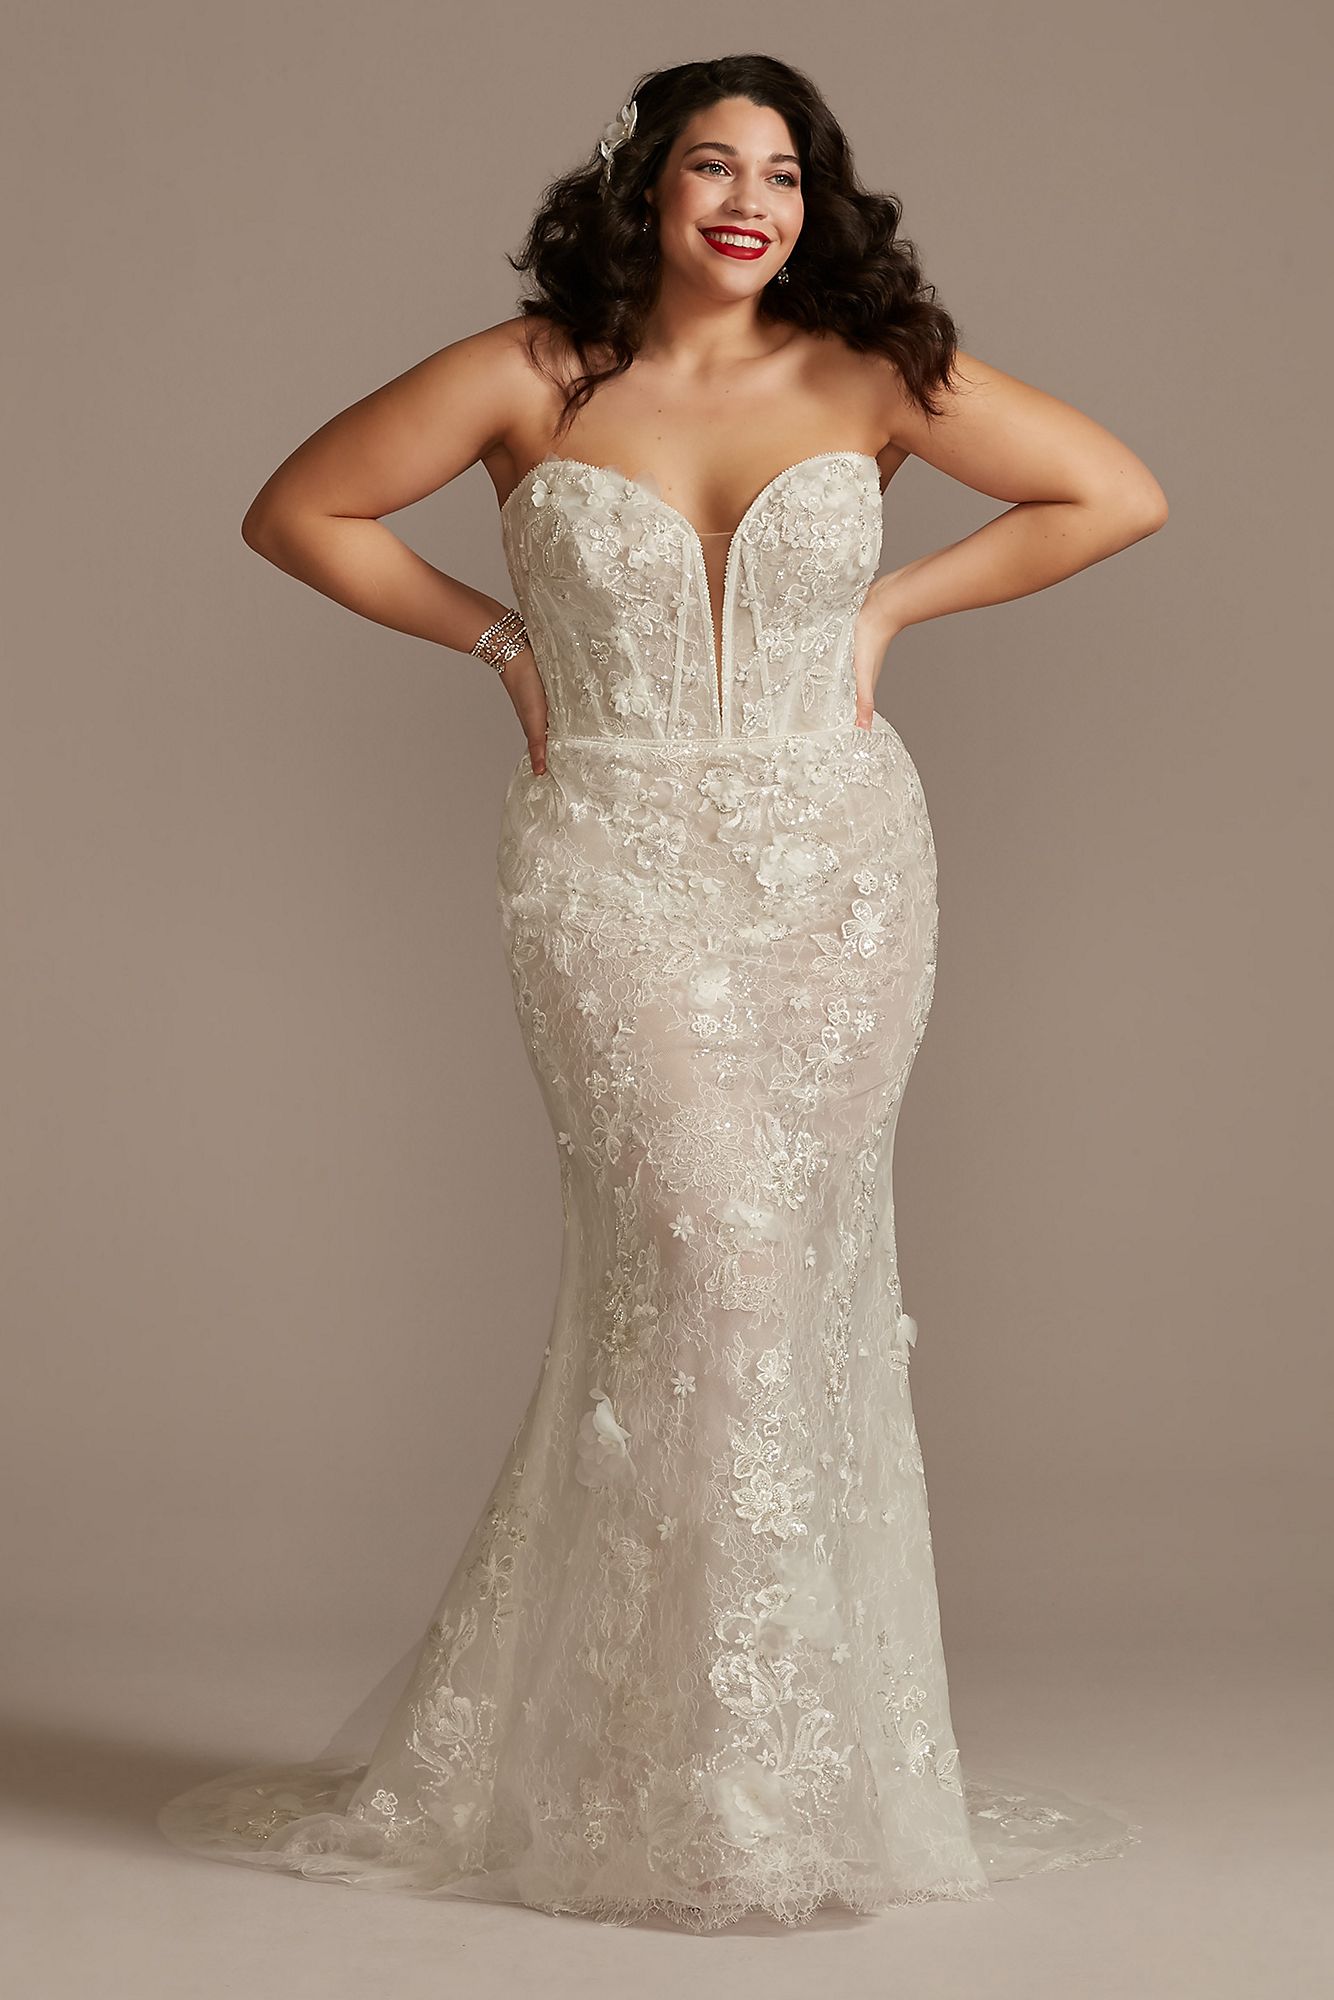 3D Floral Plunge Plus Size Bodysuit Wedding Dress Galina Signature 9MBSWG885